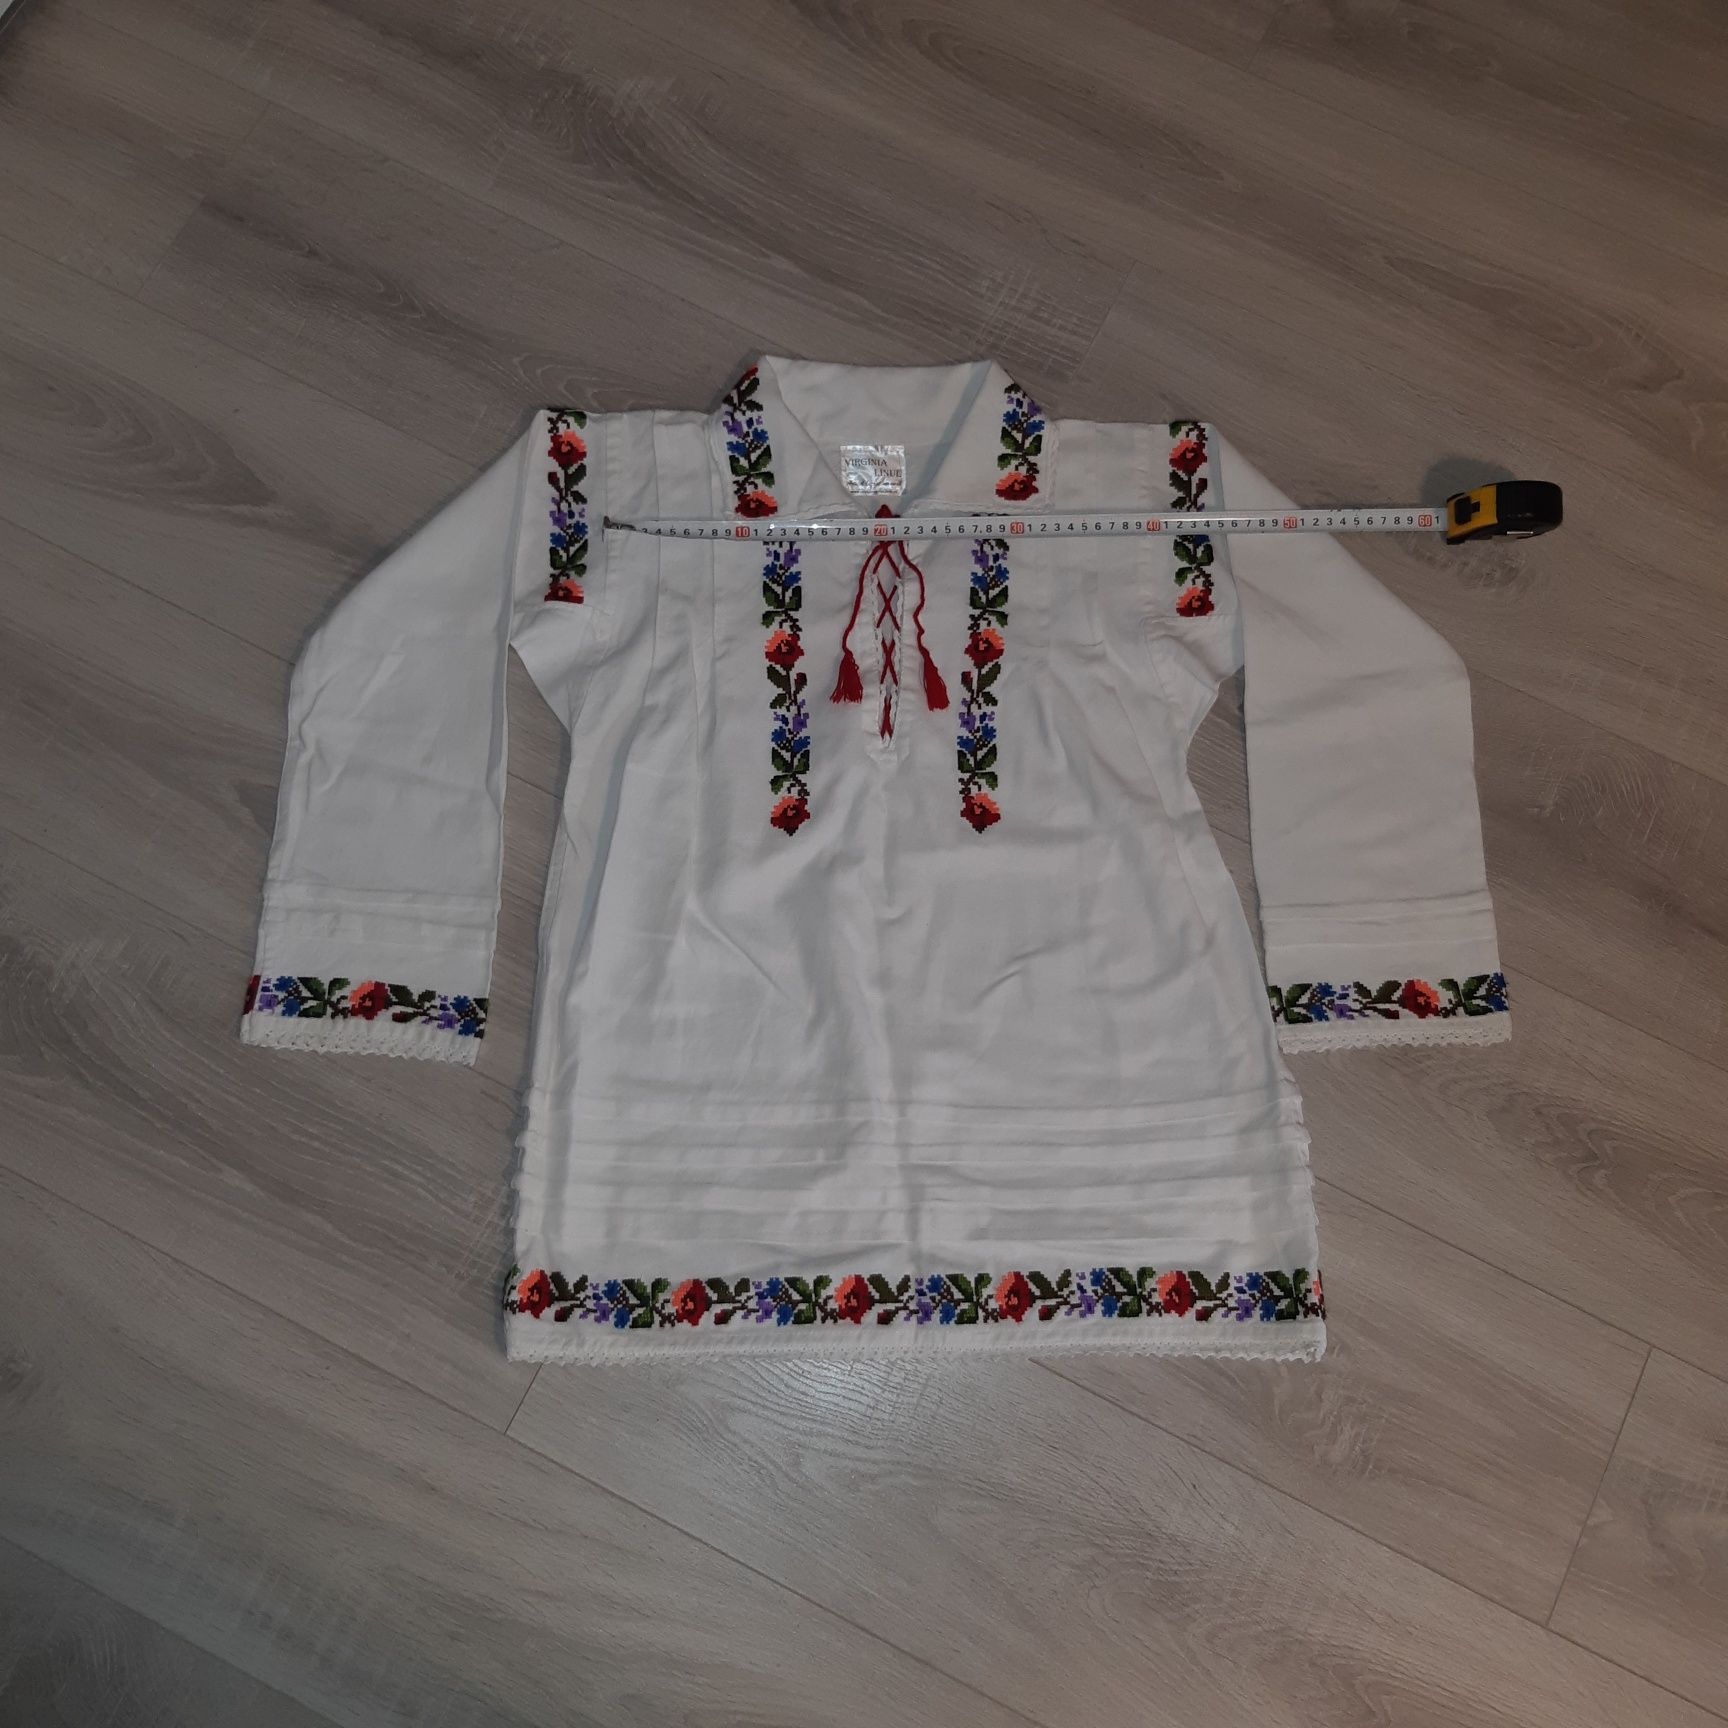 Vand camasa populara traditionala pt copii